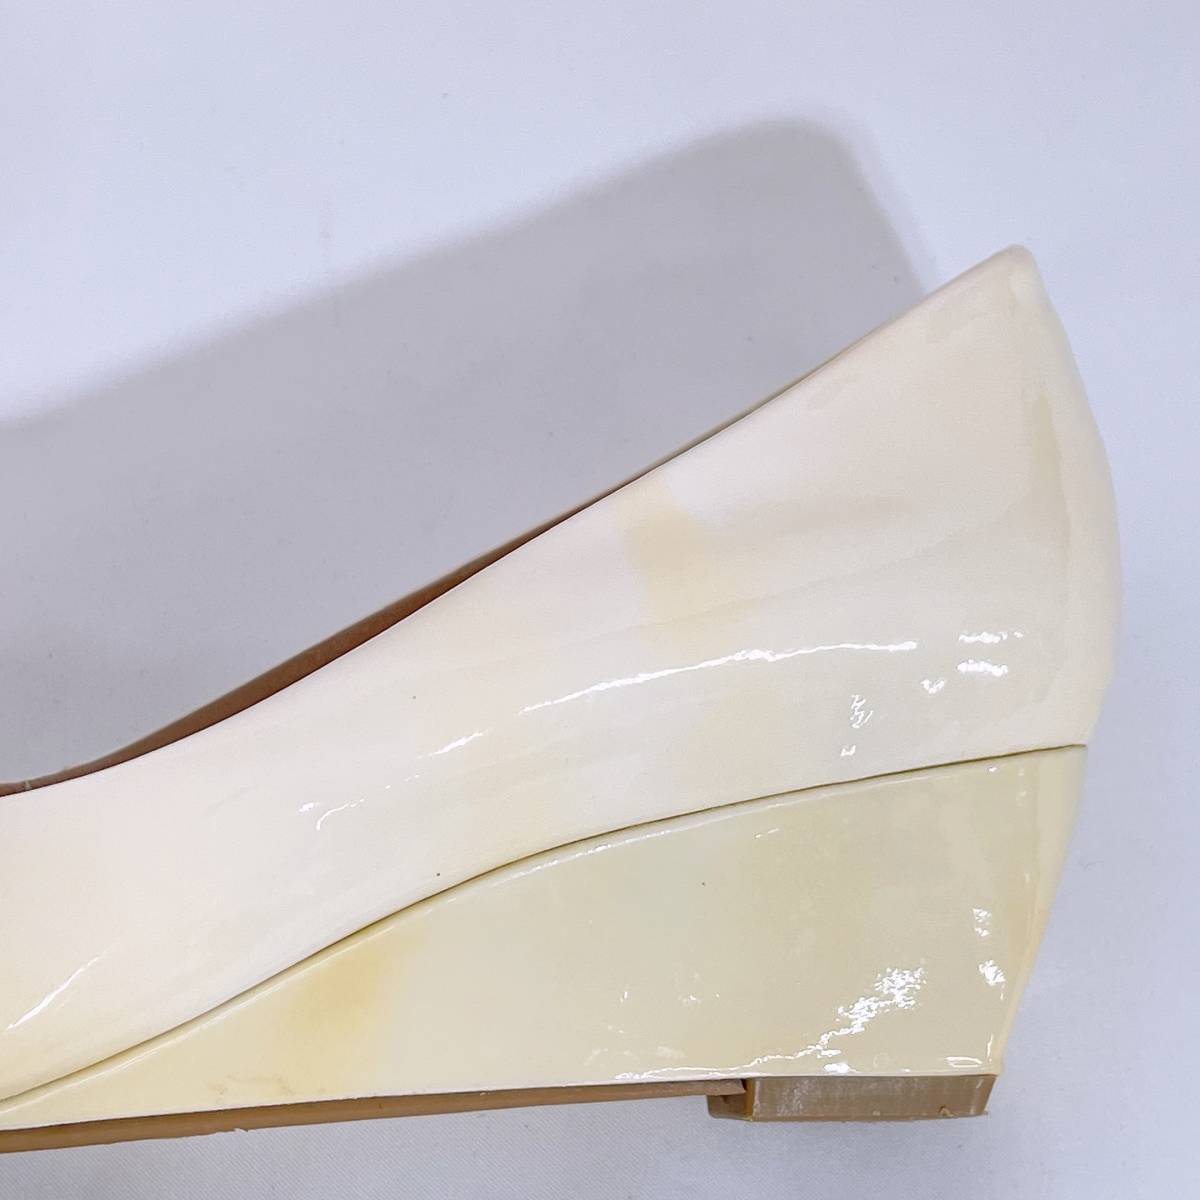  lady's USA4 22cm ROSE BUD pumps heel shoes eggshell white white translation have goods good-looking Smart dressing up Rose Bud [20031]